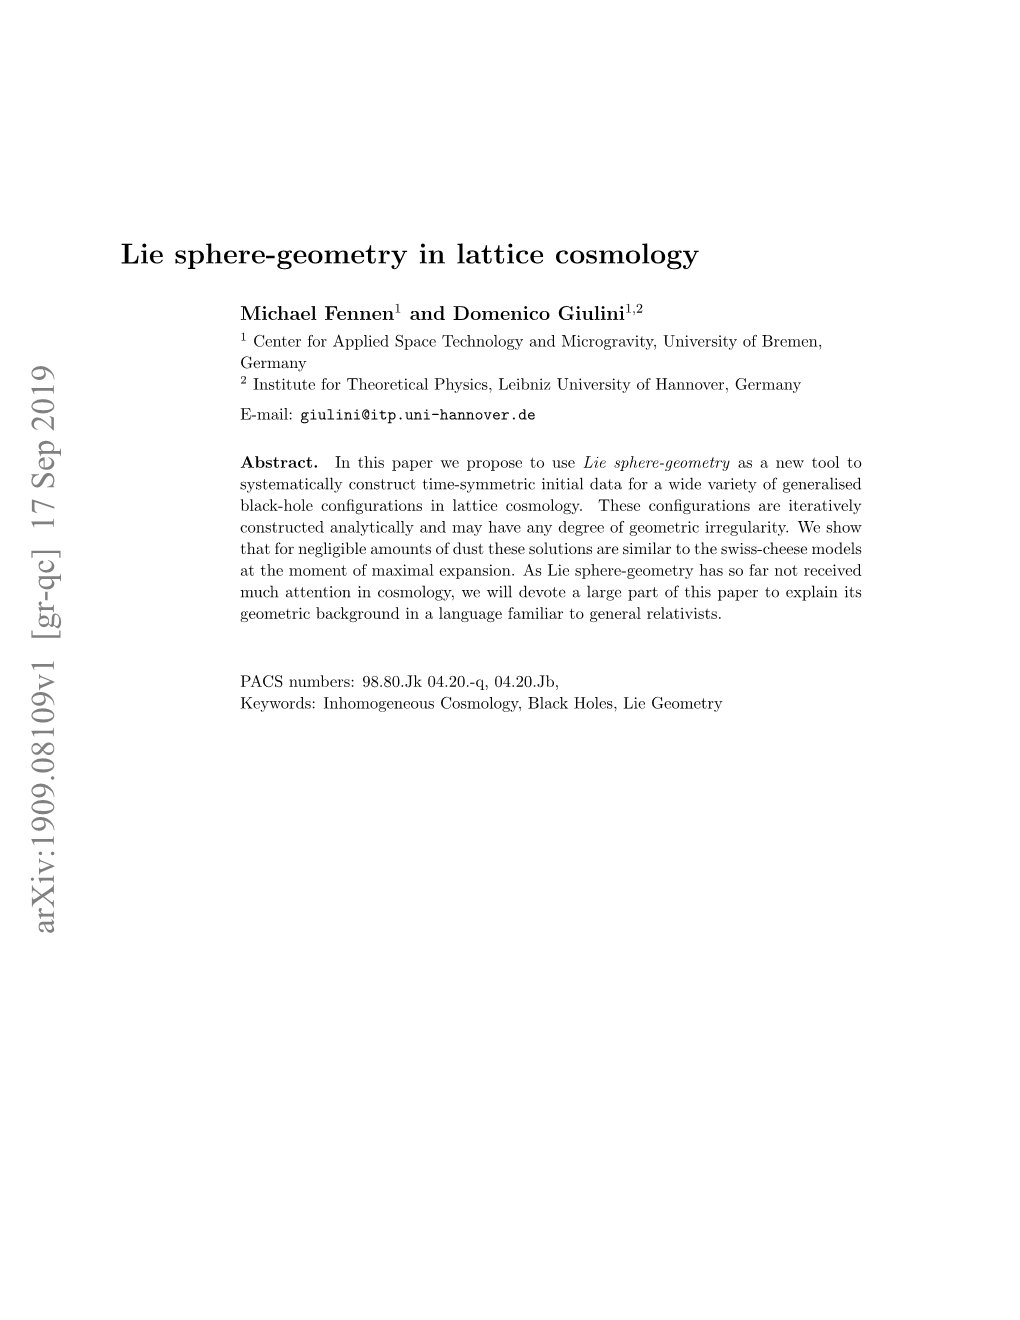 Lie Sphere-Geometry in Lattice Cosmology